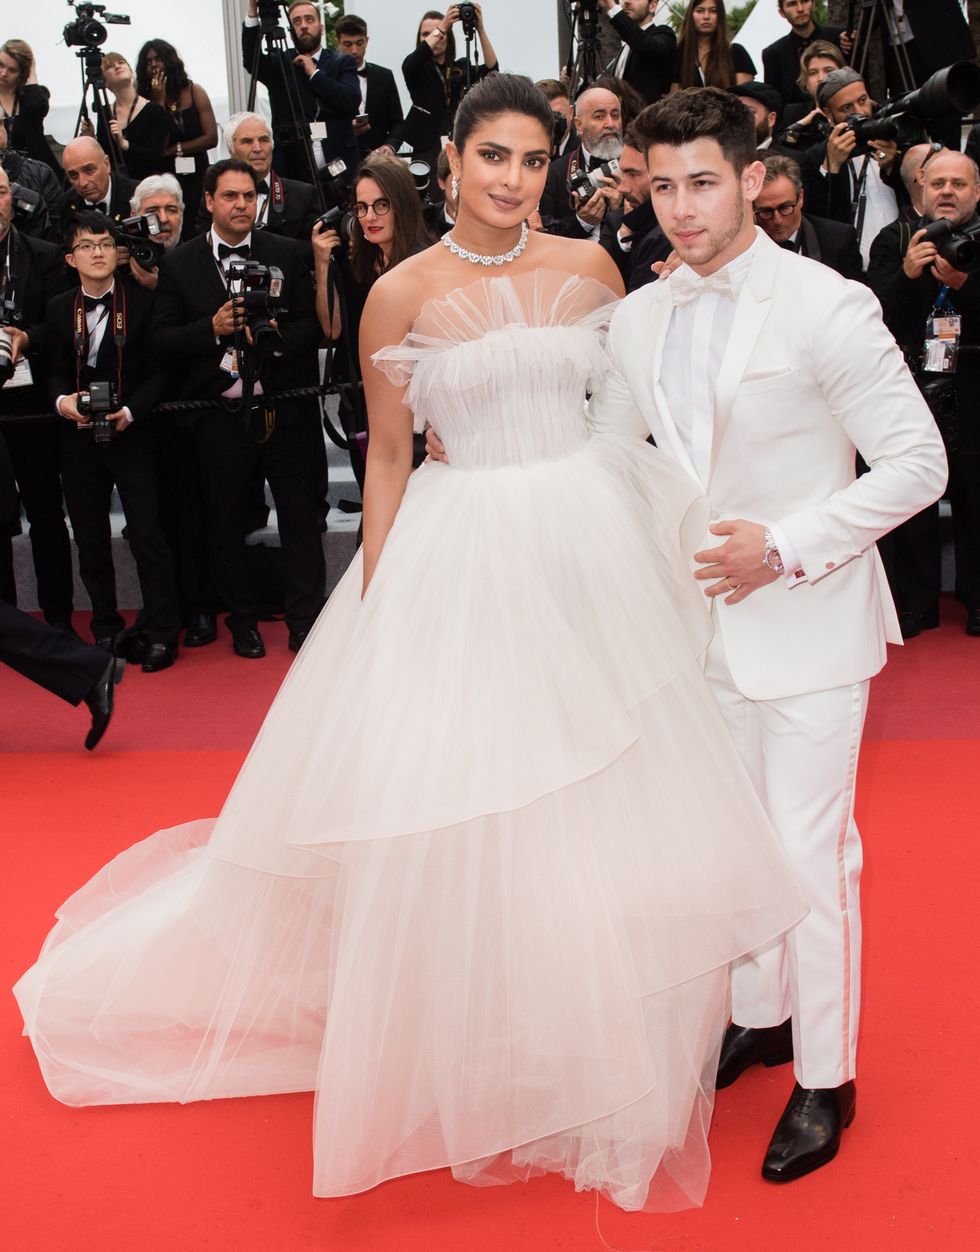 Priyanka Chopra wore an actual wedding dress on the Cannes red carpet